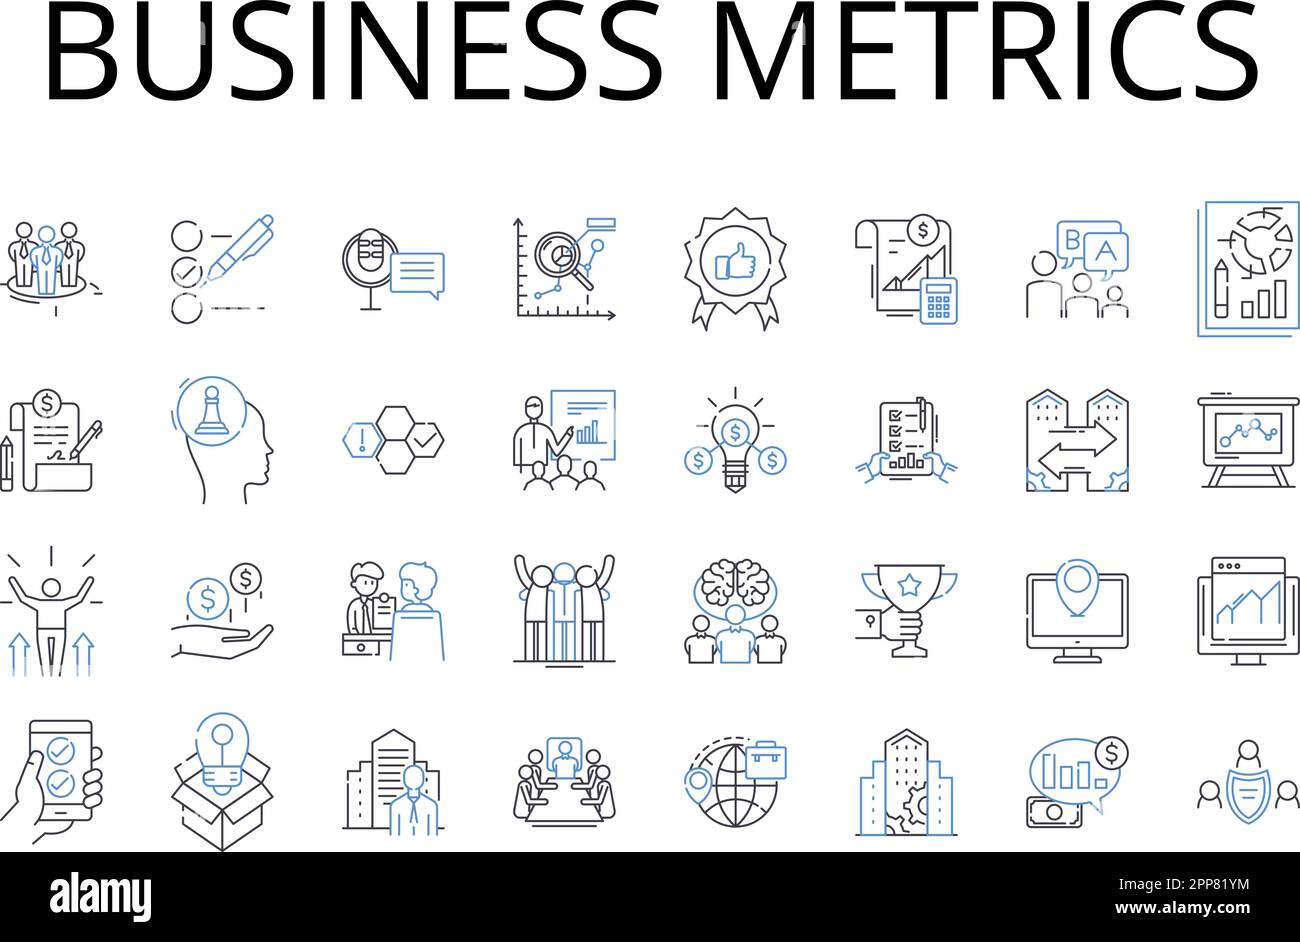 Business metrics line icons collection. Financial indicators, Performance measures, Marketing analytics, Sales metrics, Operational data, Customer Stock Vector